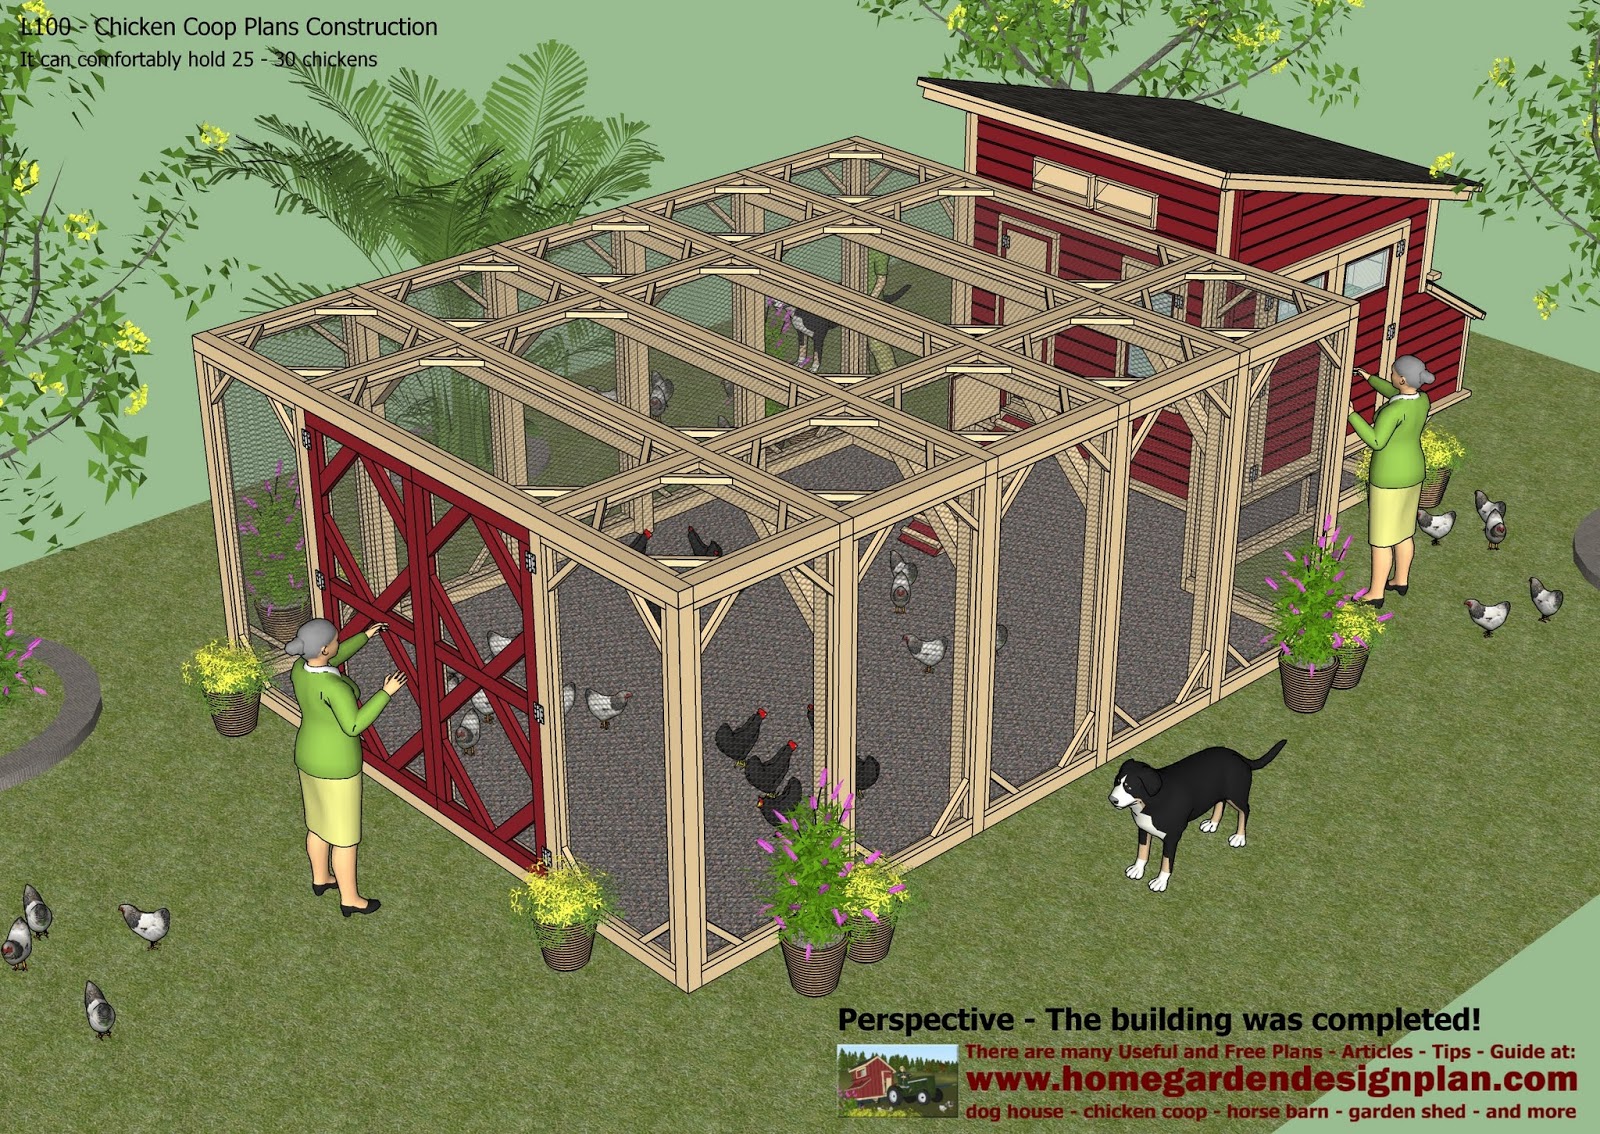 L100 - Chicken Coop Plans Construction - Chicken Coop Design - How To 